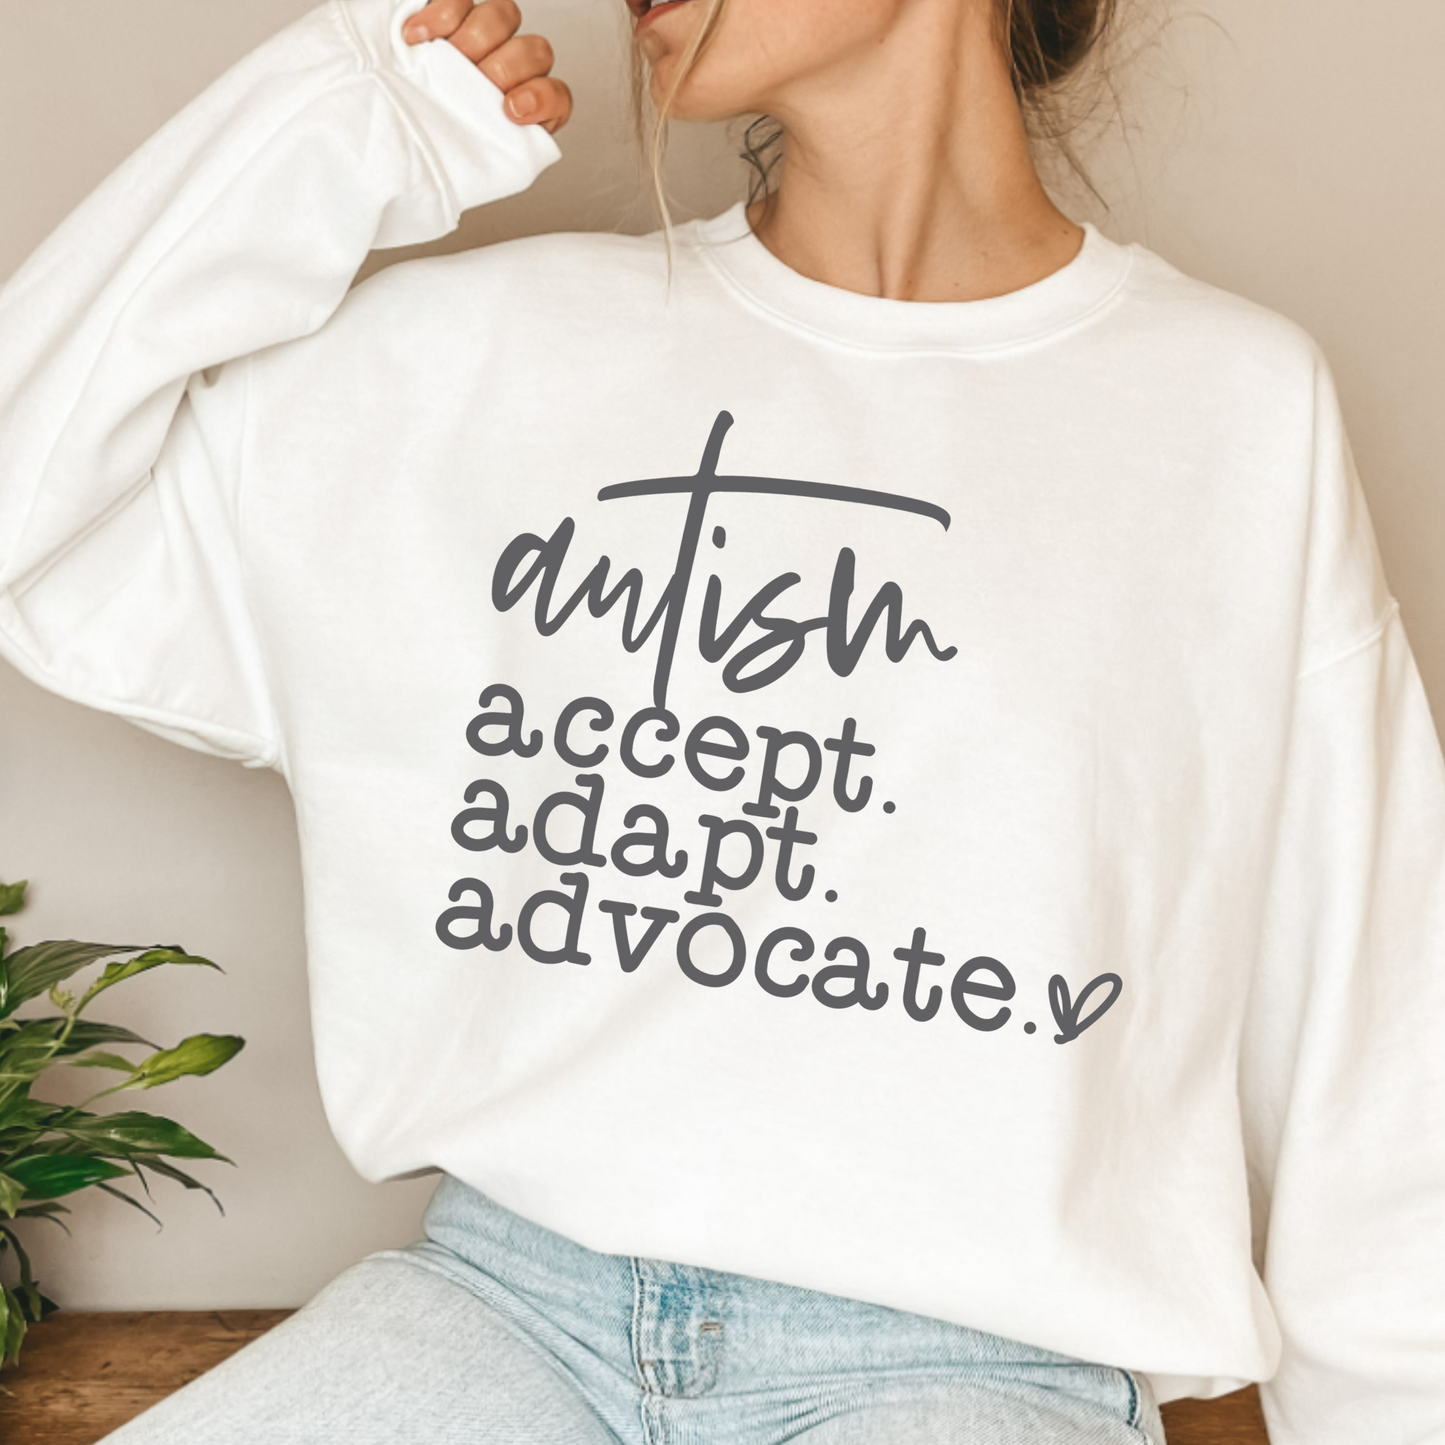 (shirt not included) Autism. accept. adapt. advocate - Metallic Platinum - Screen print Transfer